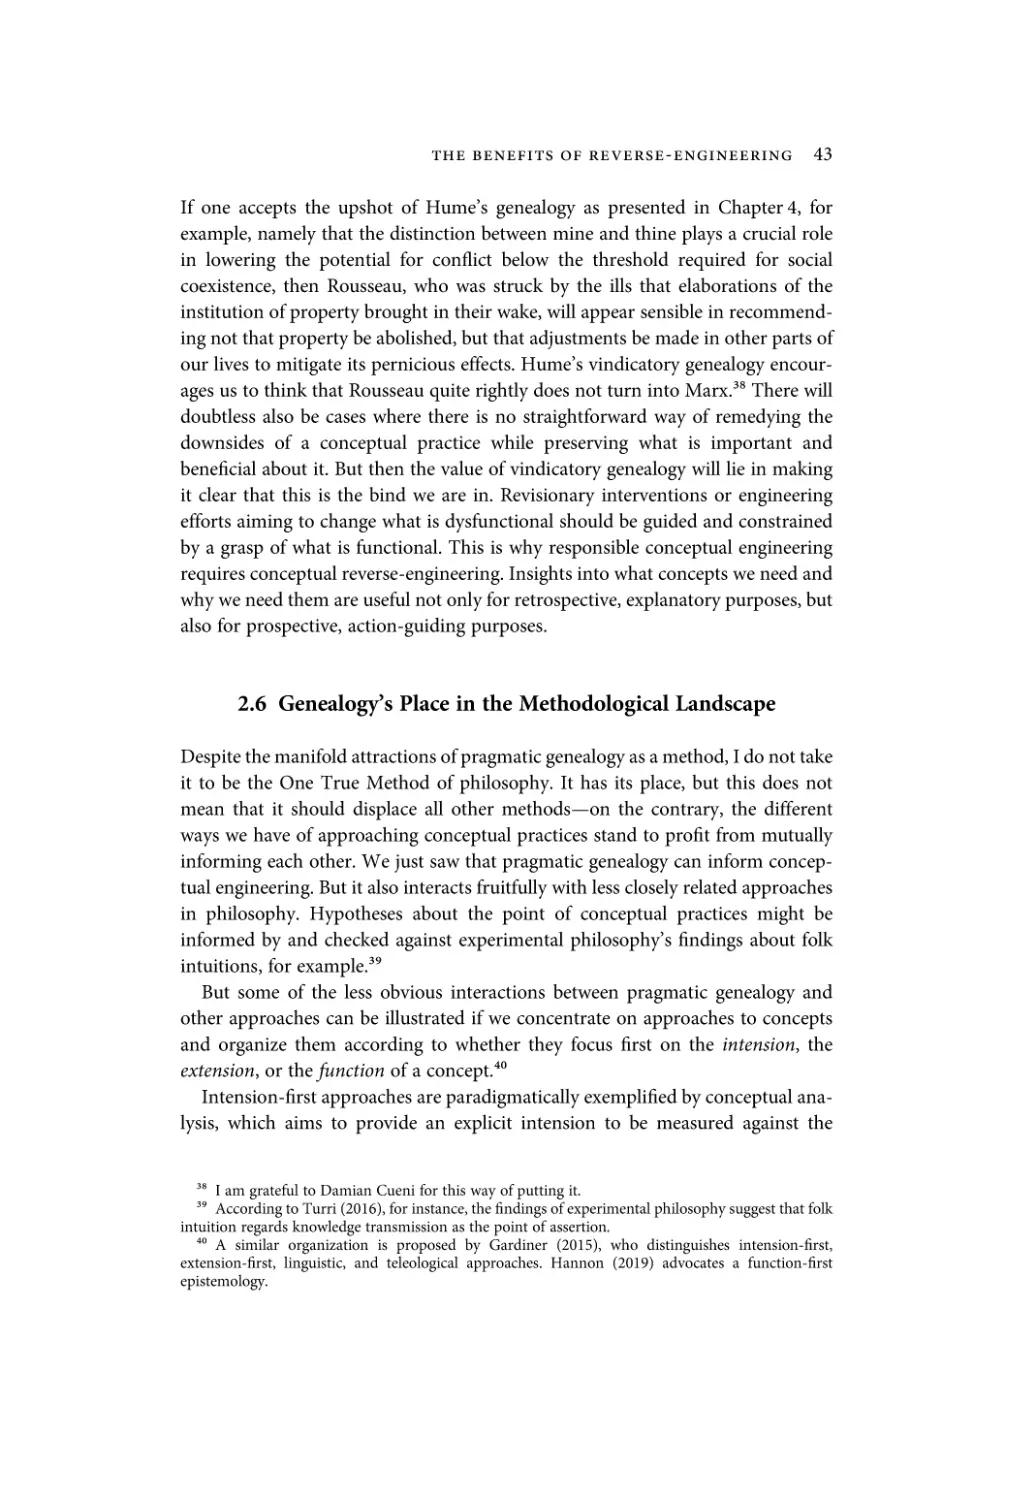 2.6 Genealogy’s Place in the Methodological Landscape